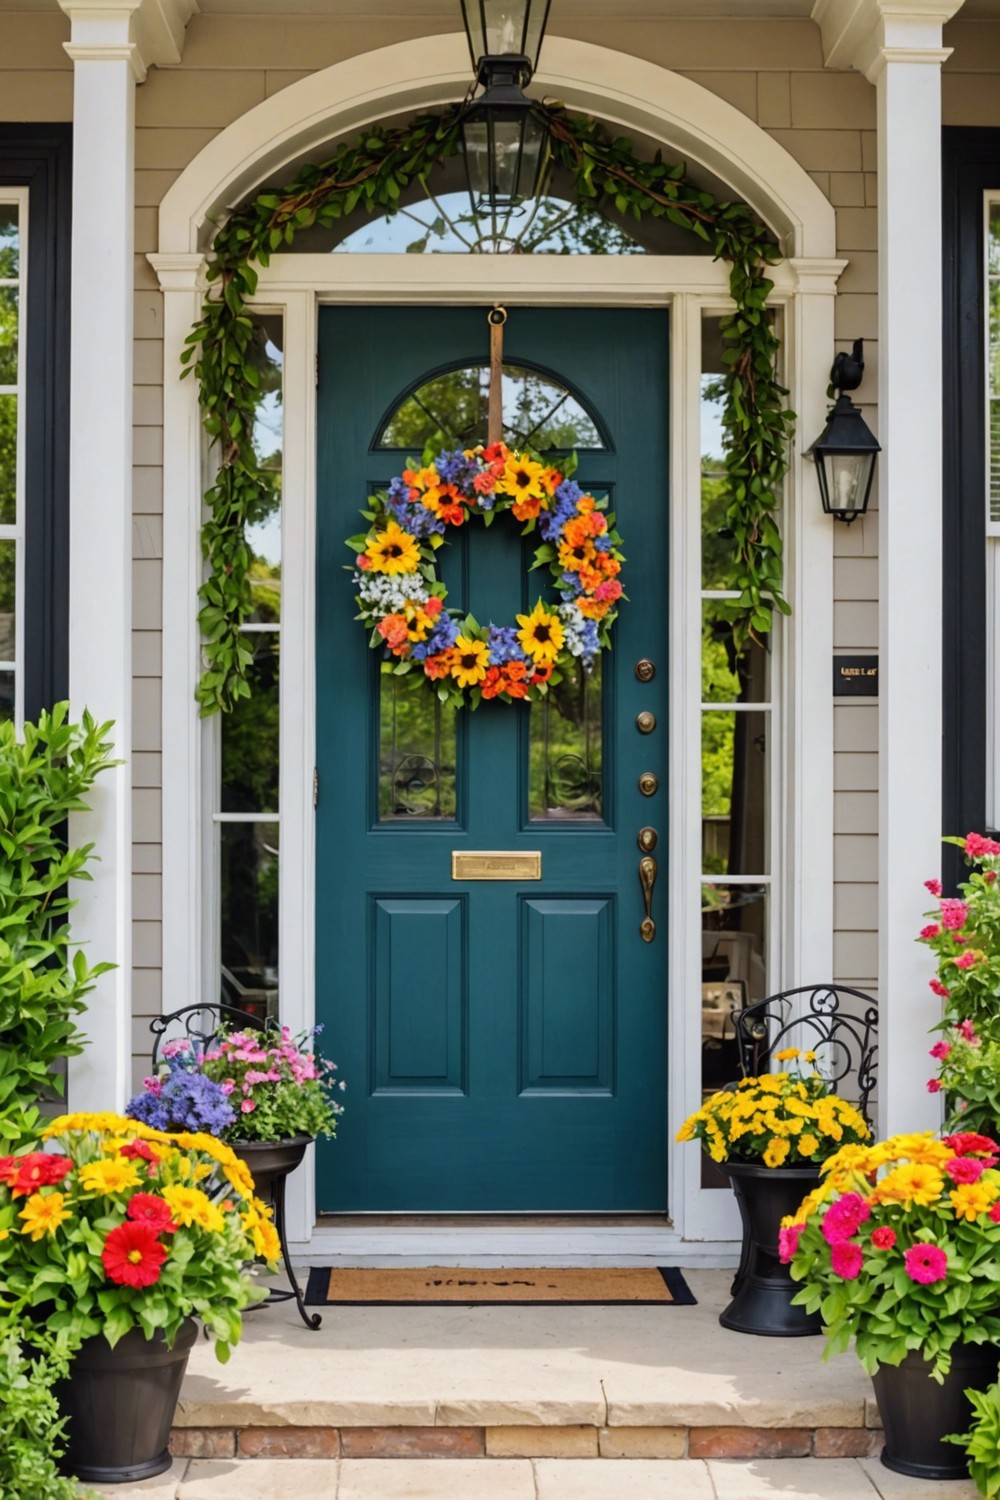 Welcome Summer with a Vibrant Door Wreath